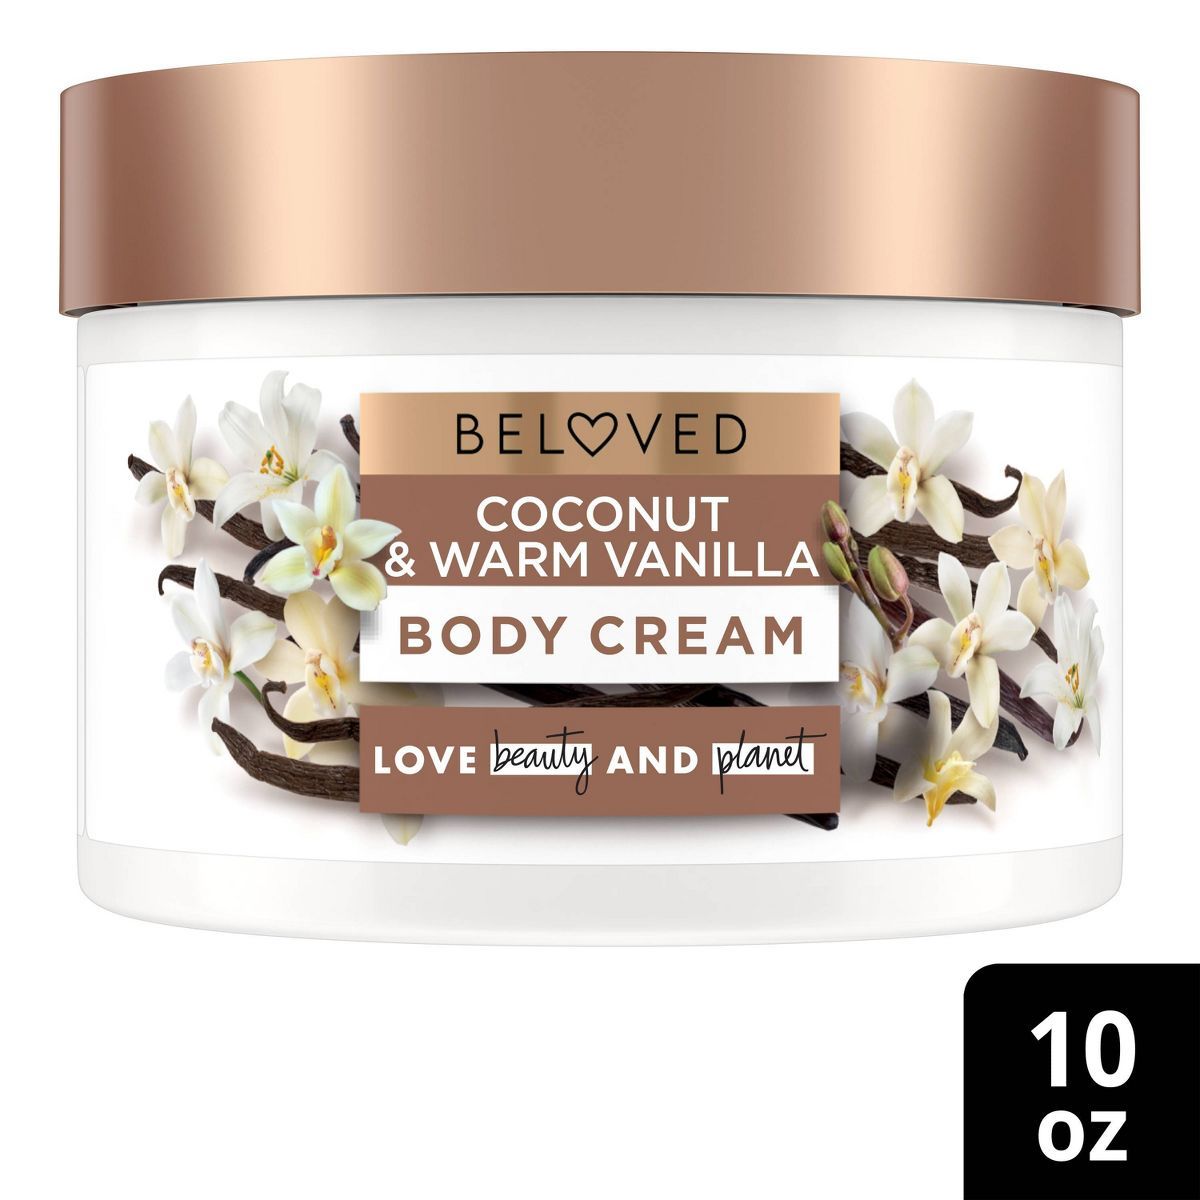 Beloved Coconut & Warm Vanilla Body Cream Lotion - 10oz | Target